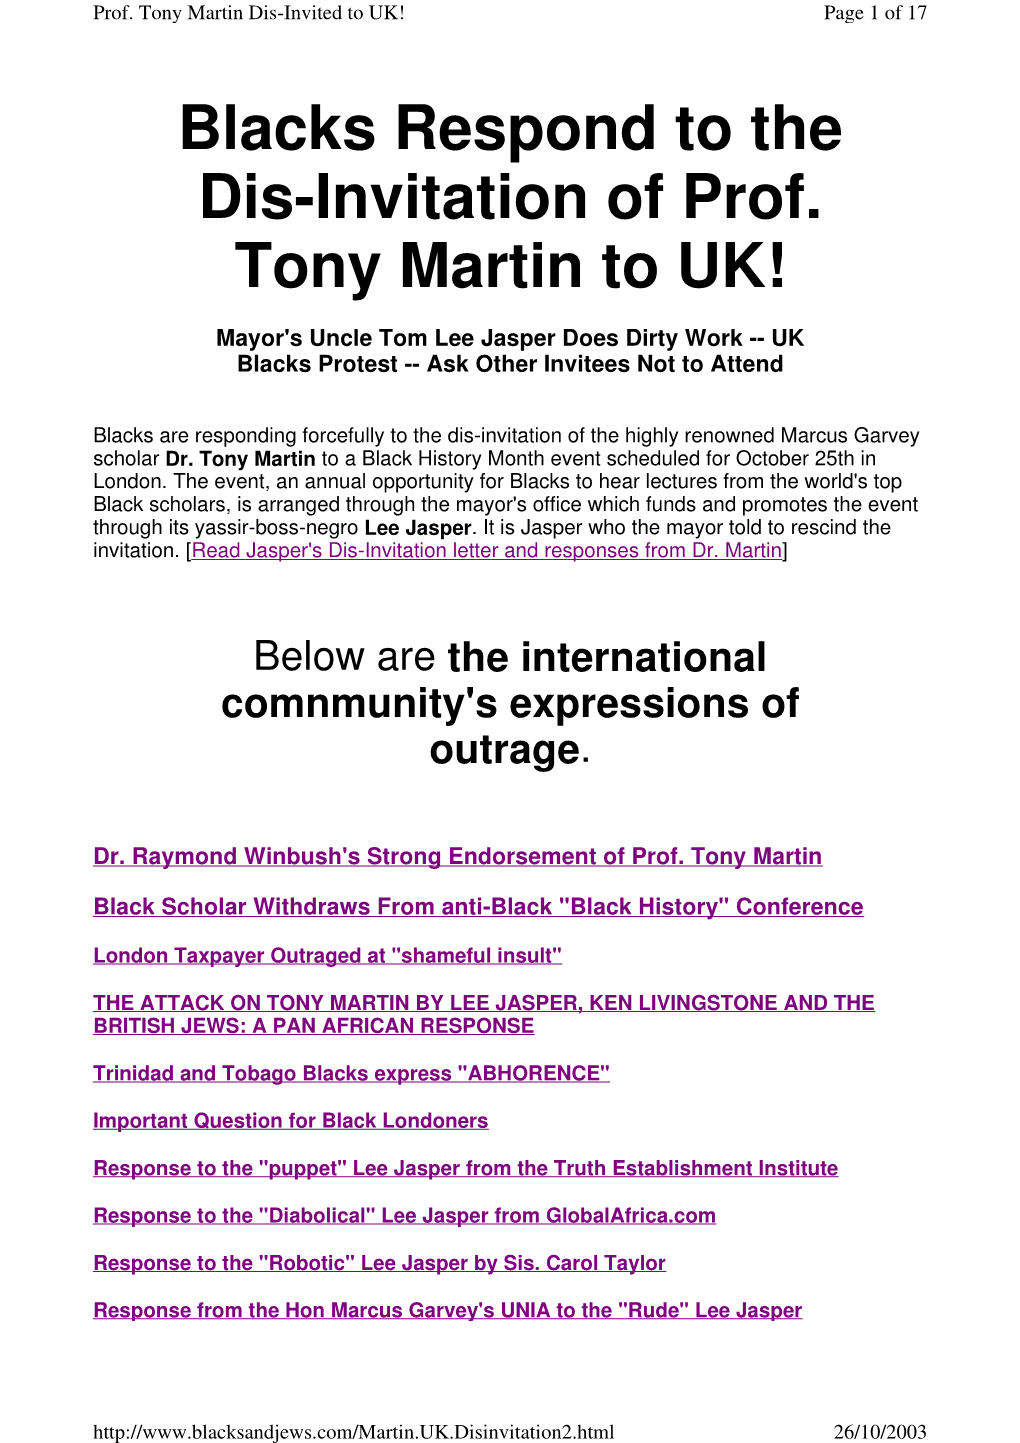 Blacks Respond to the Dis-Invitation of Prof. Tony Martin to UK!